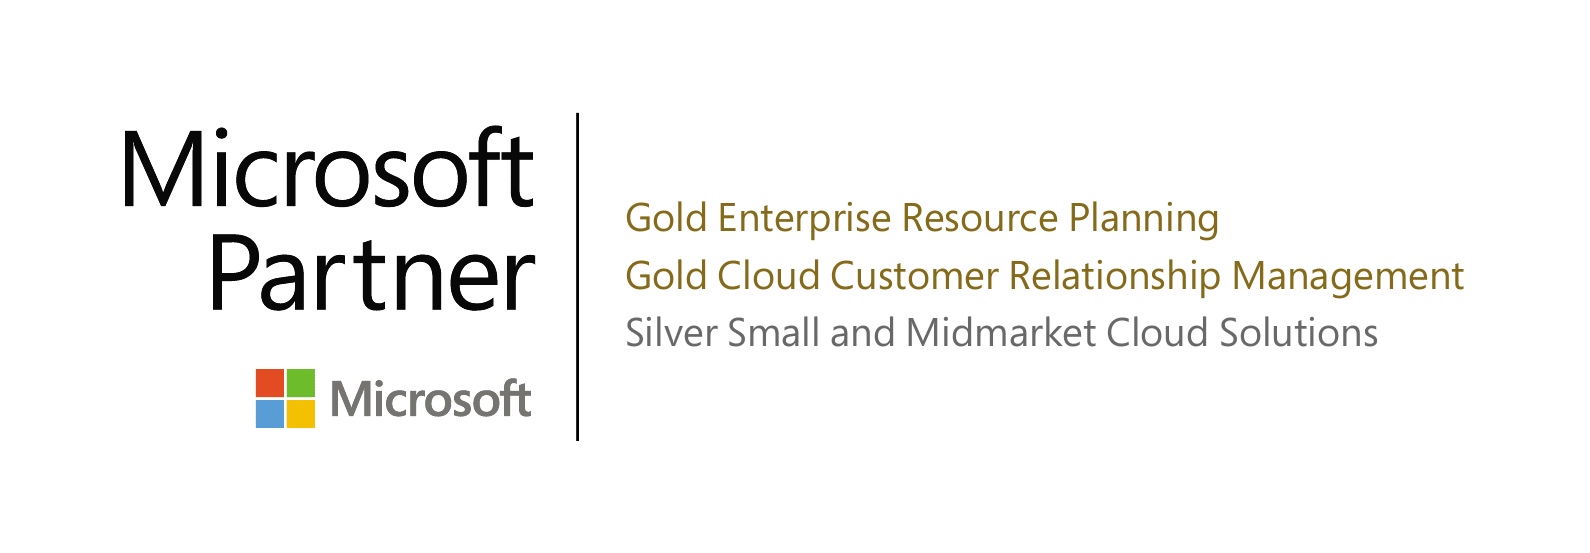 Stoneridge software achieves microsoft gold partner status for cloud crm certification